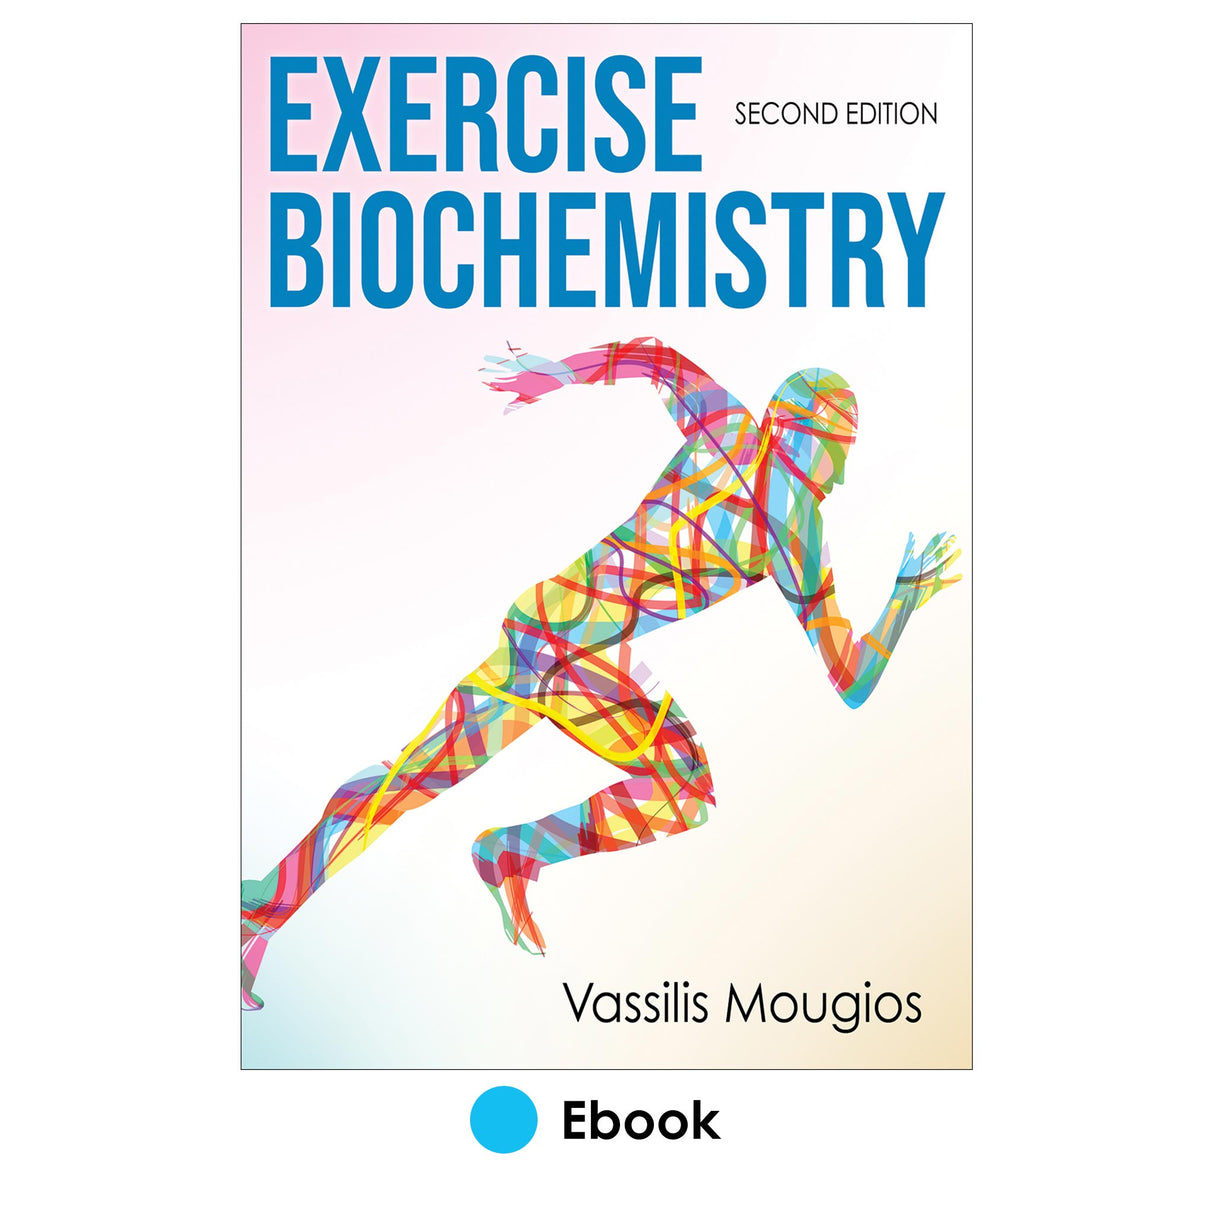 Exercise Biochemistry 2nd Edition epub